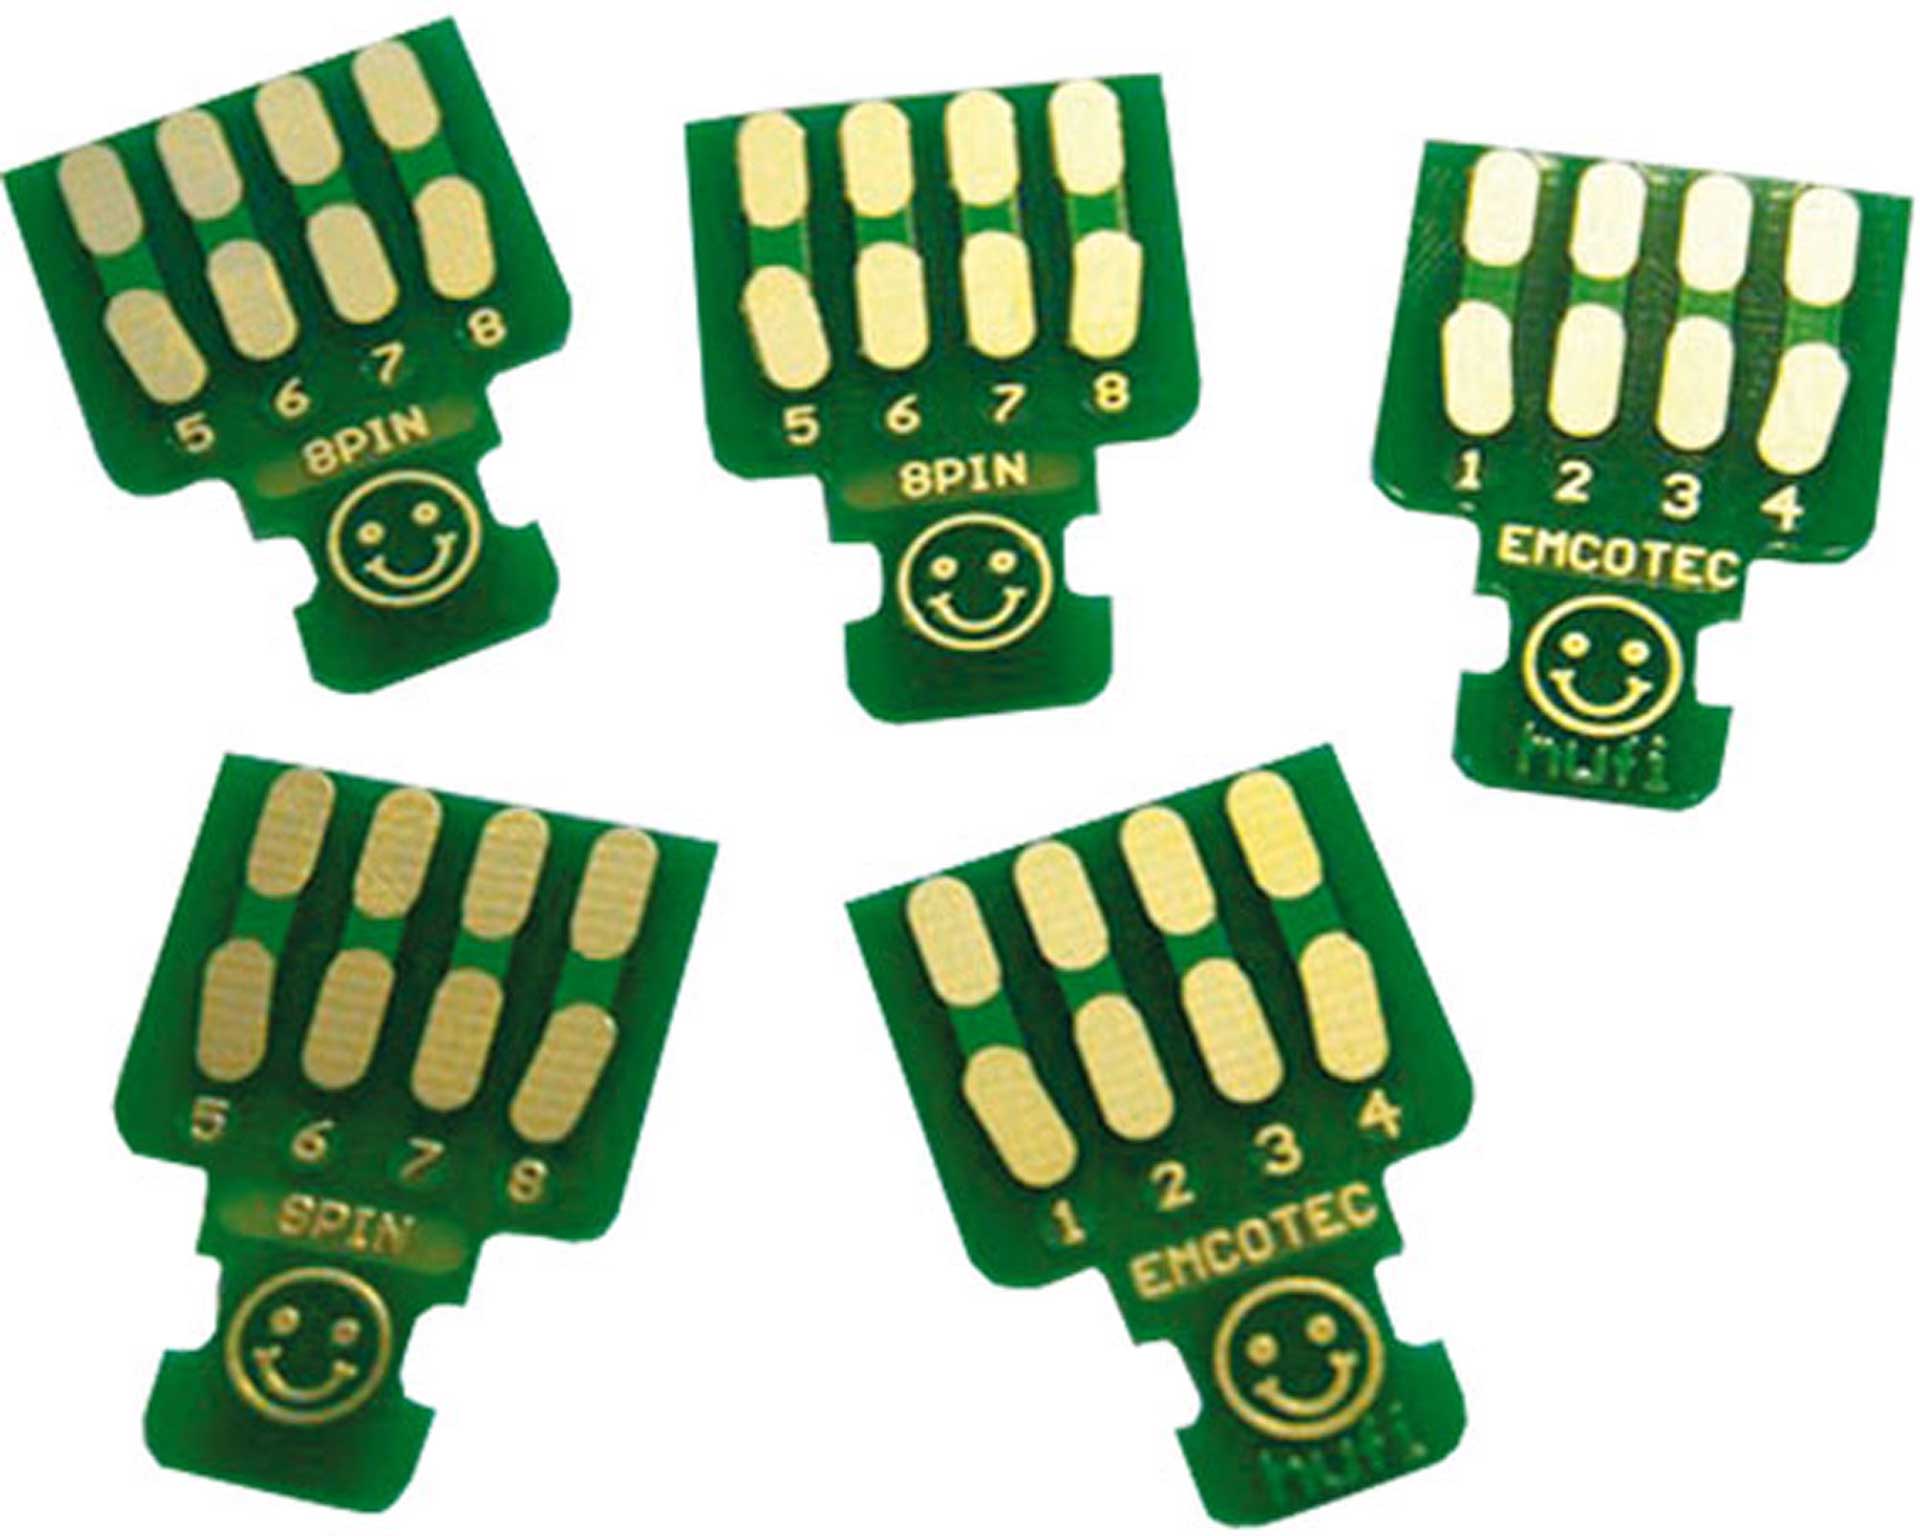 EMCOTEC SOLDERING BOARDS 8-PIN 5PCS. SUITABLE FOR EMCOTEC A85305 / A85310